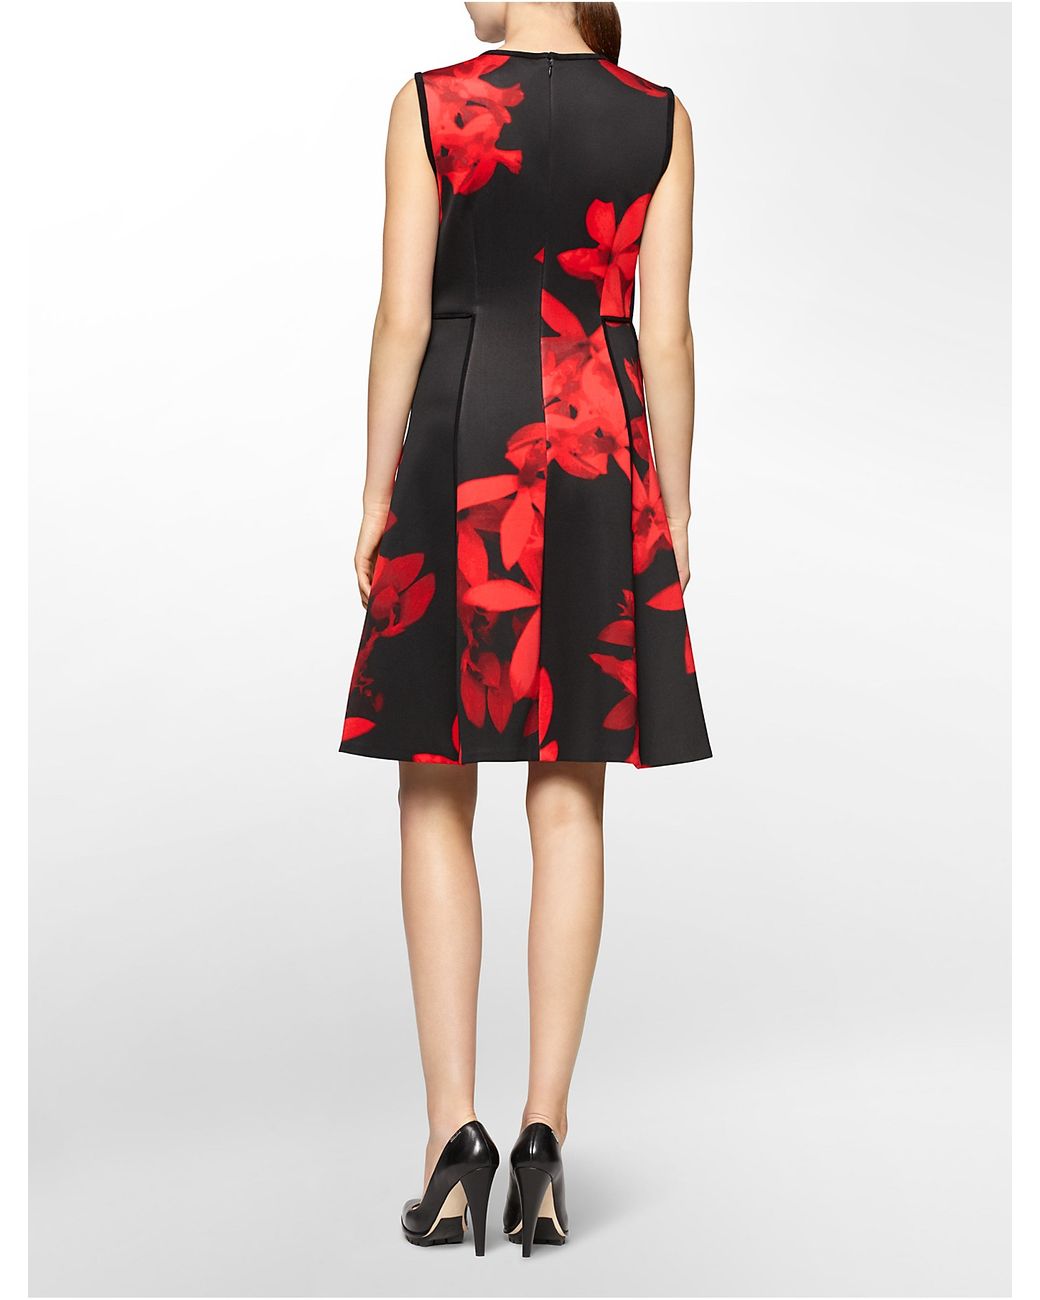 Descubrir 36+ imagen calvin klein black dress with red flowers